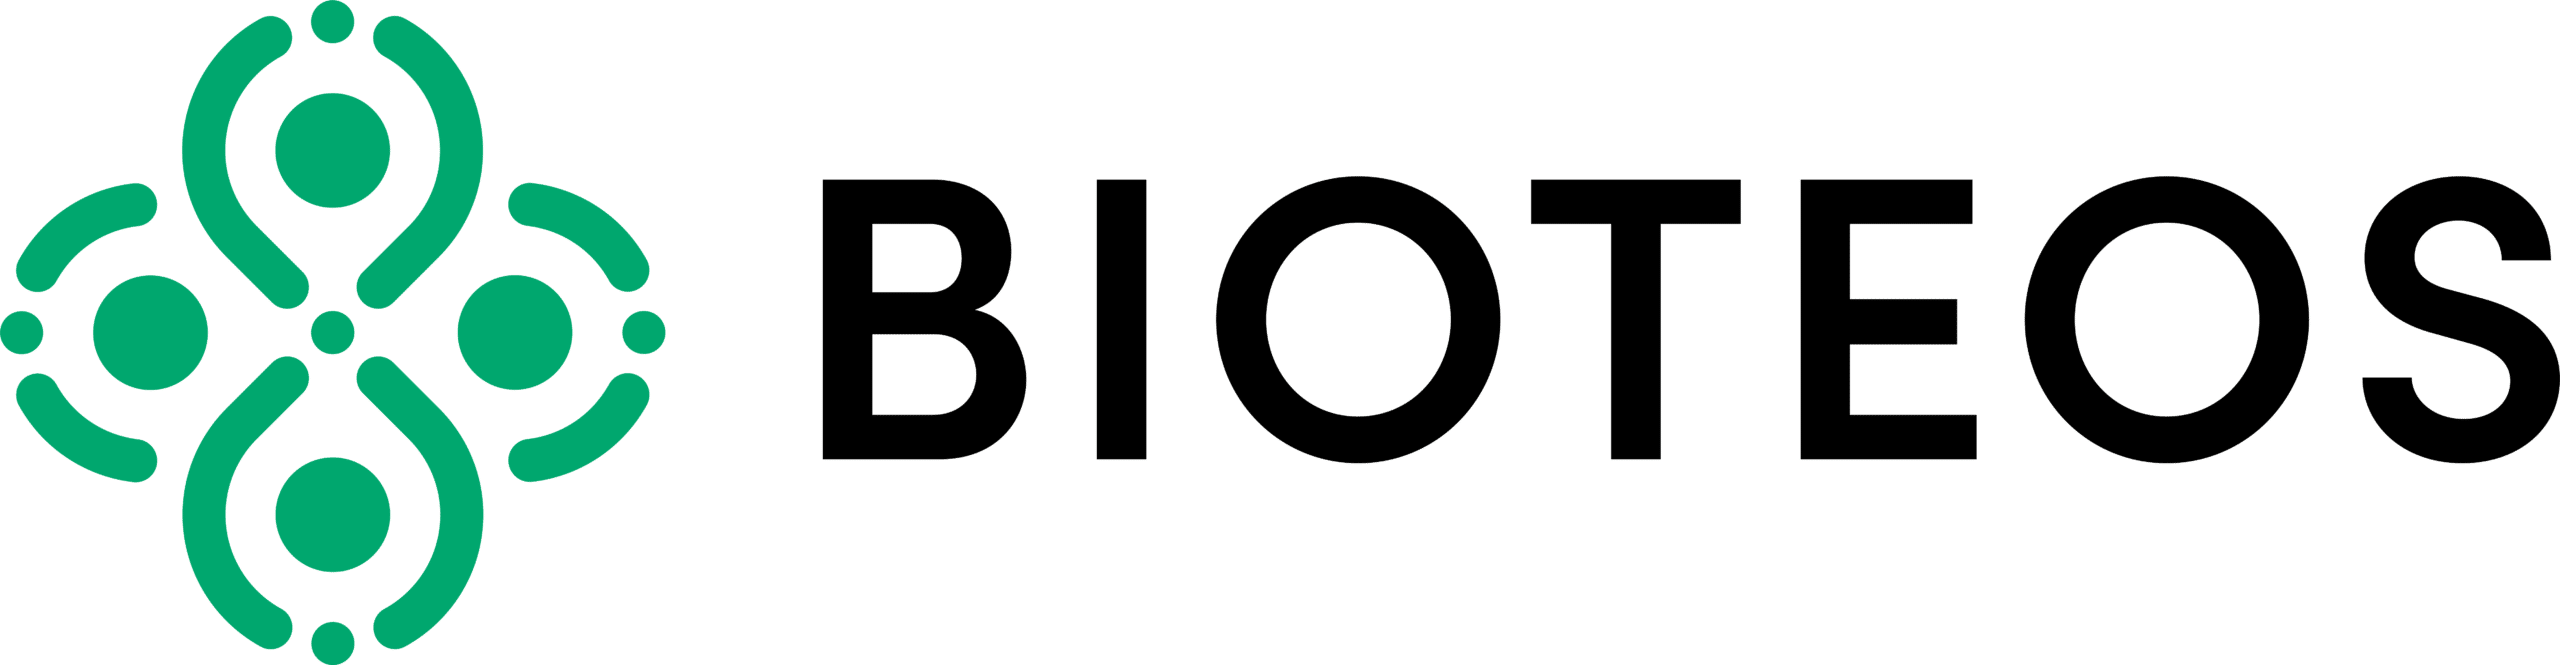 logo Bioteos